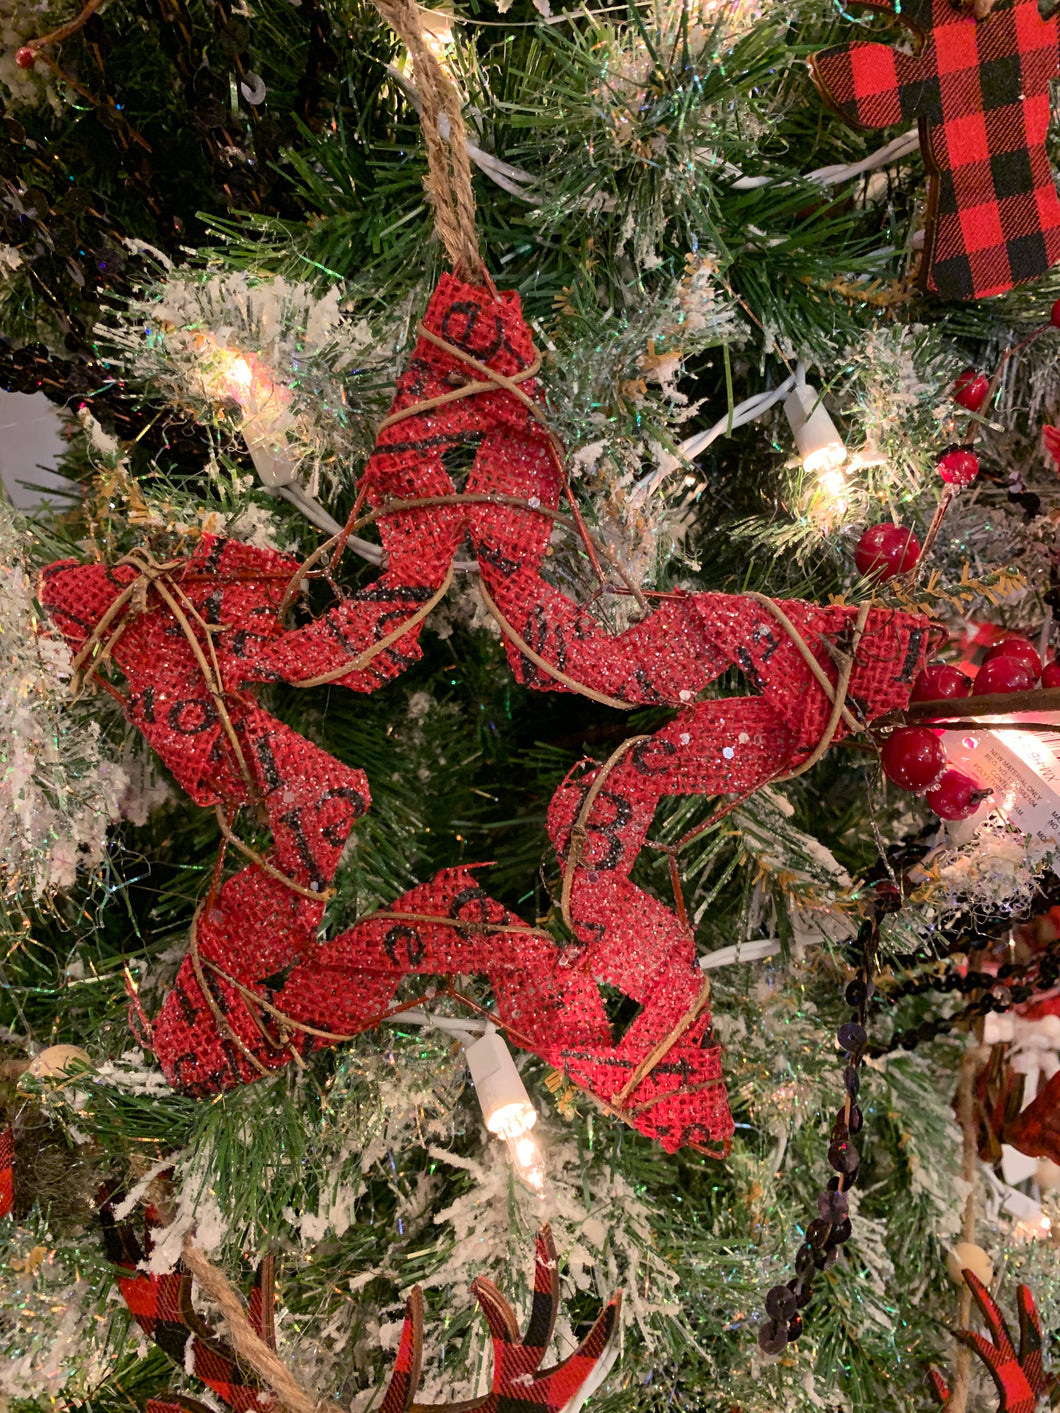 Red Burlap Star Ornament